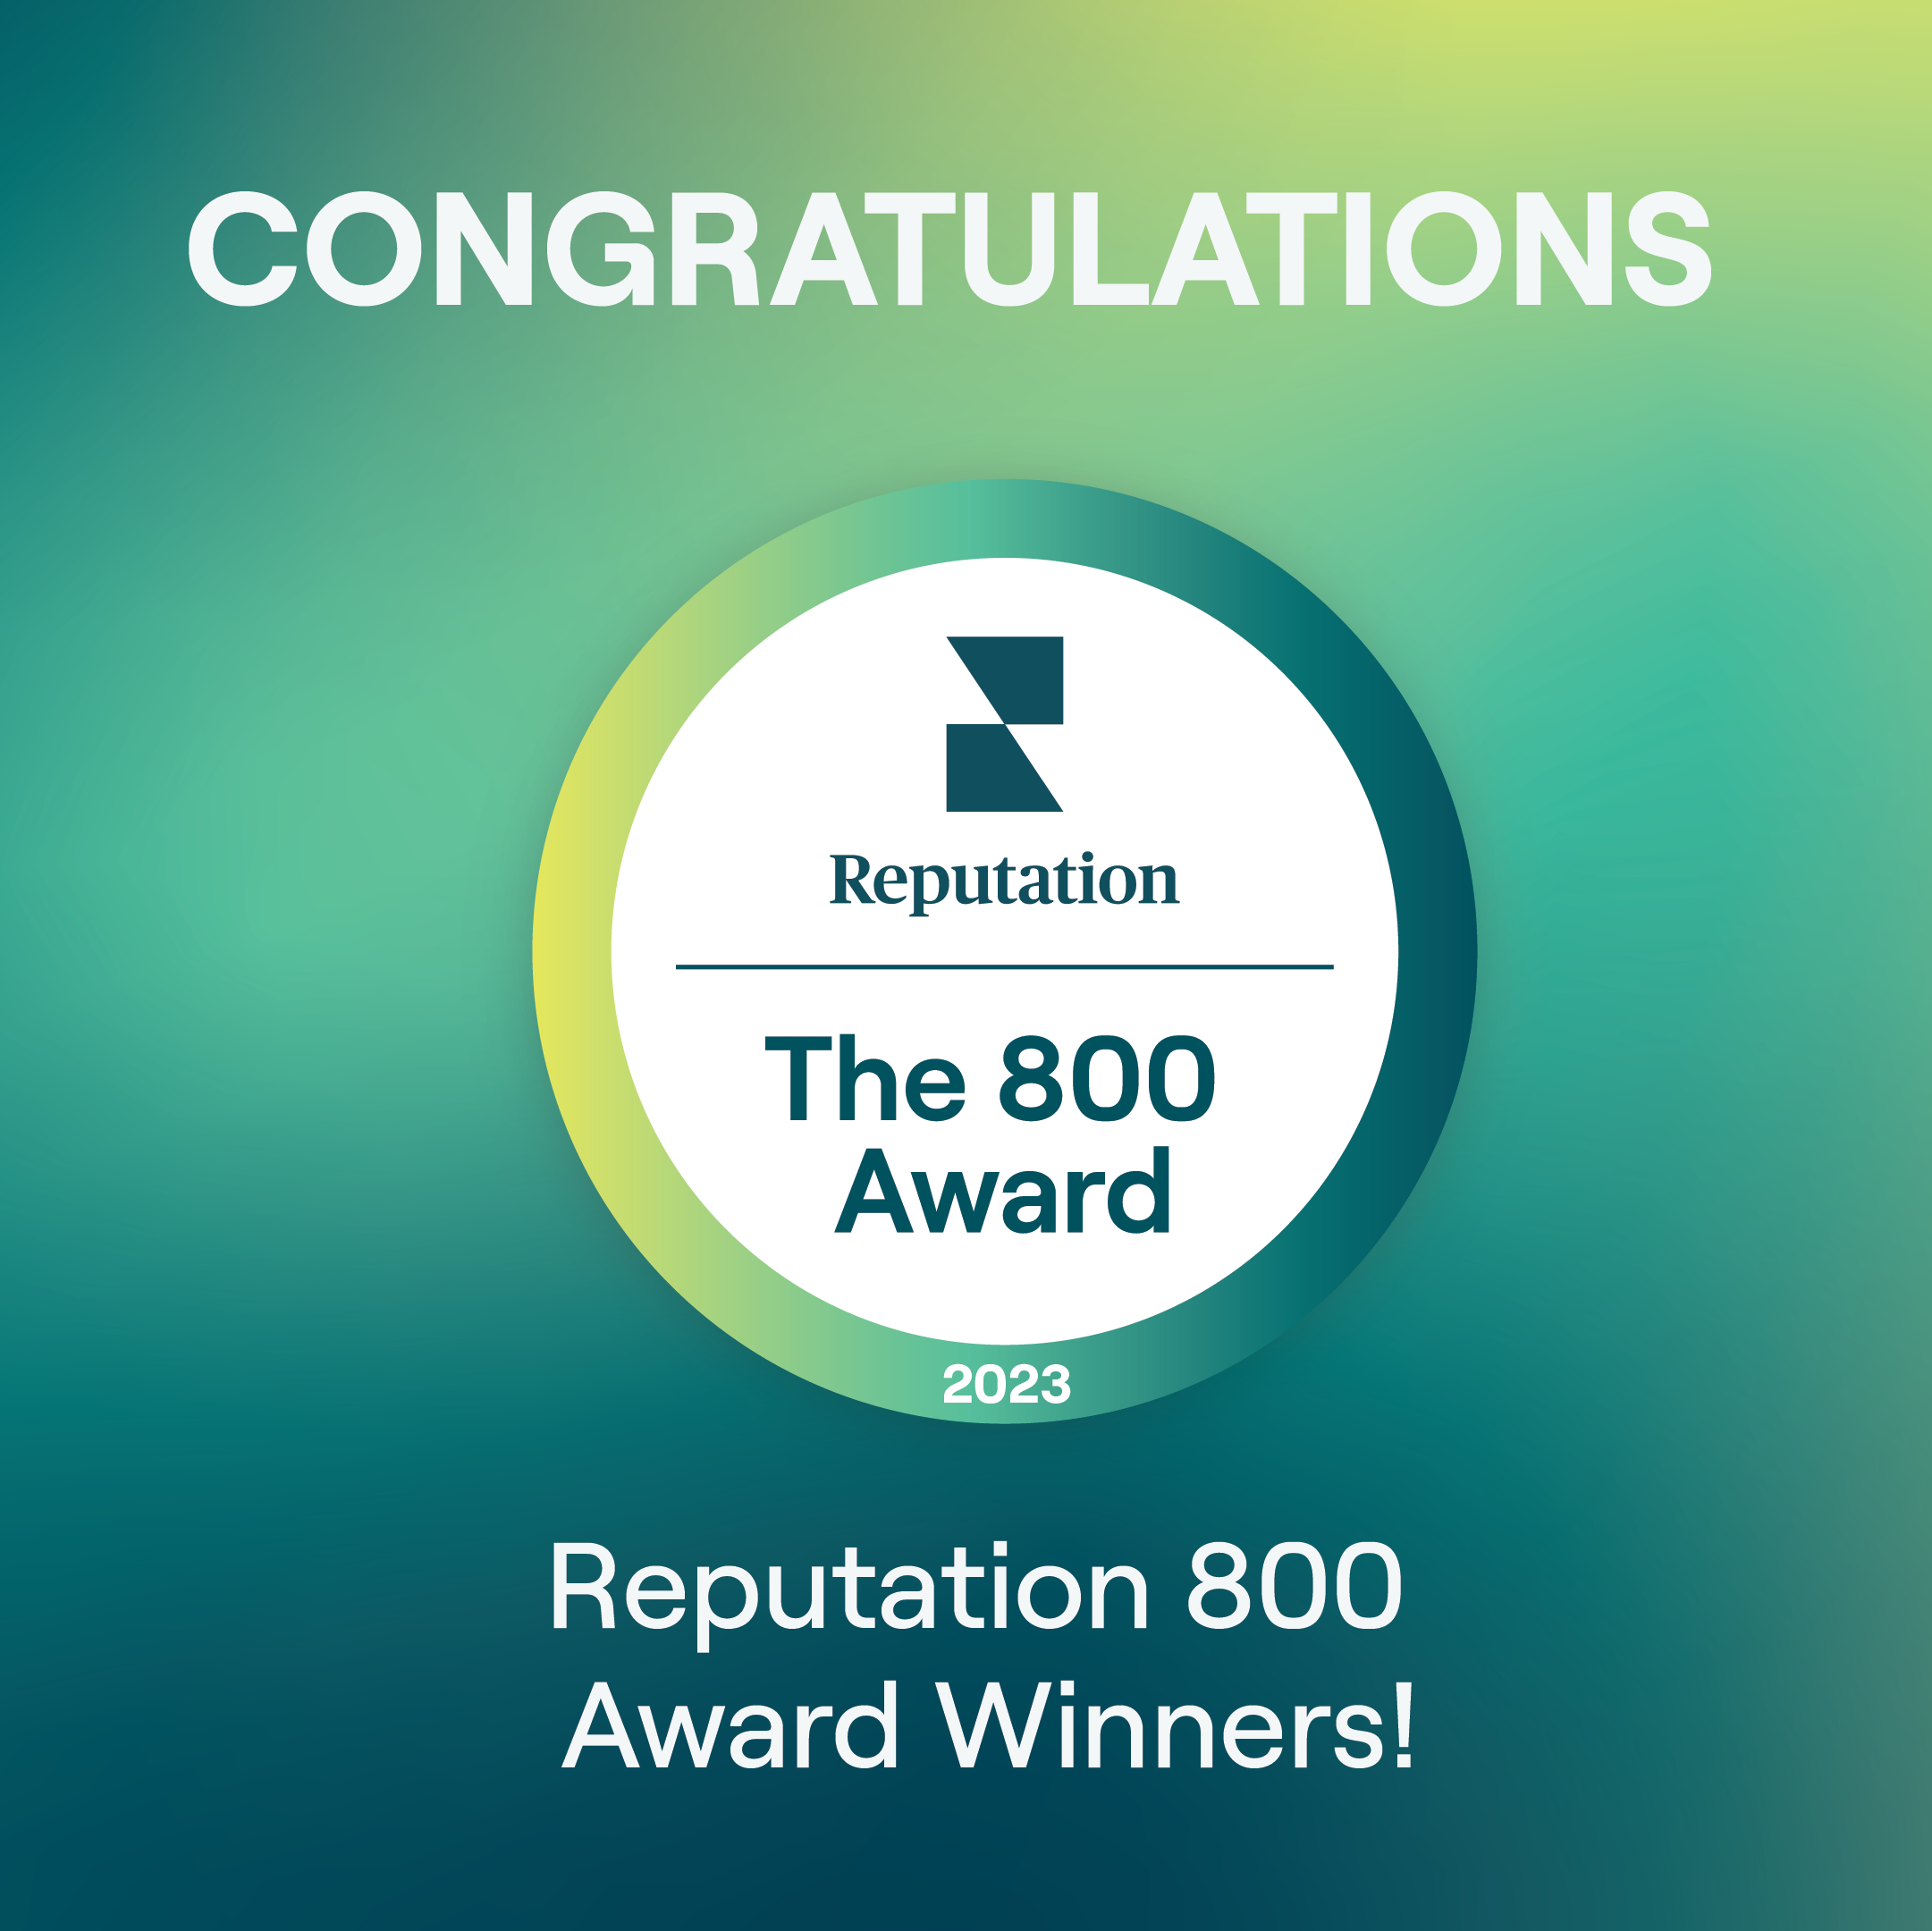 The 800 Award